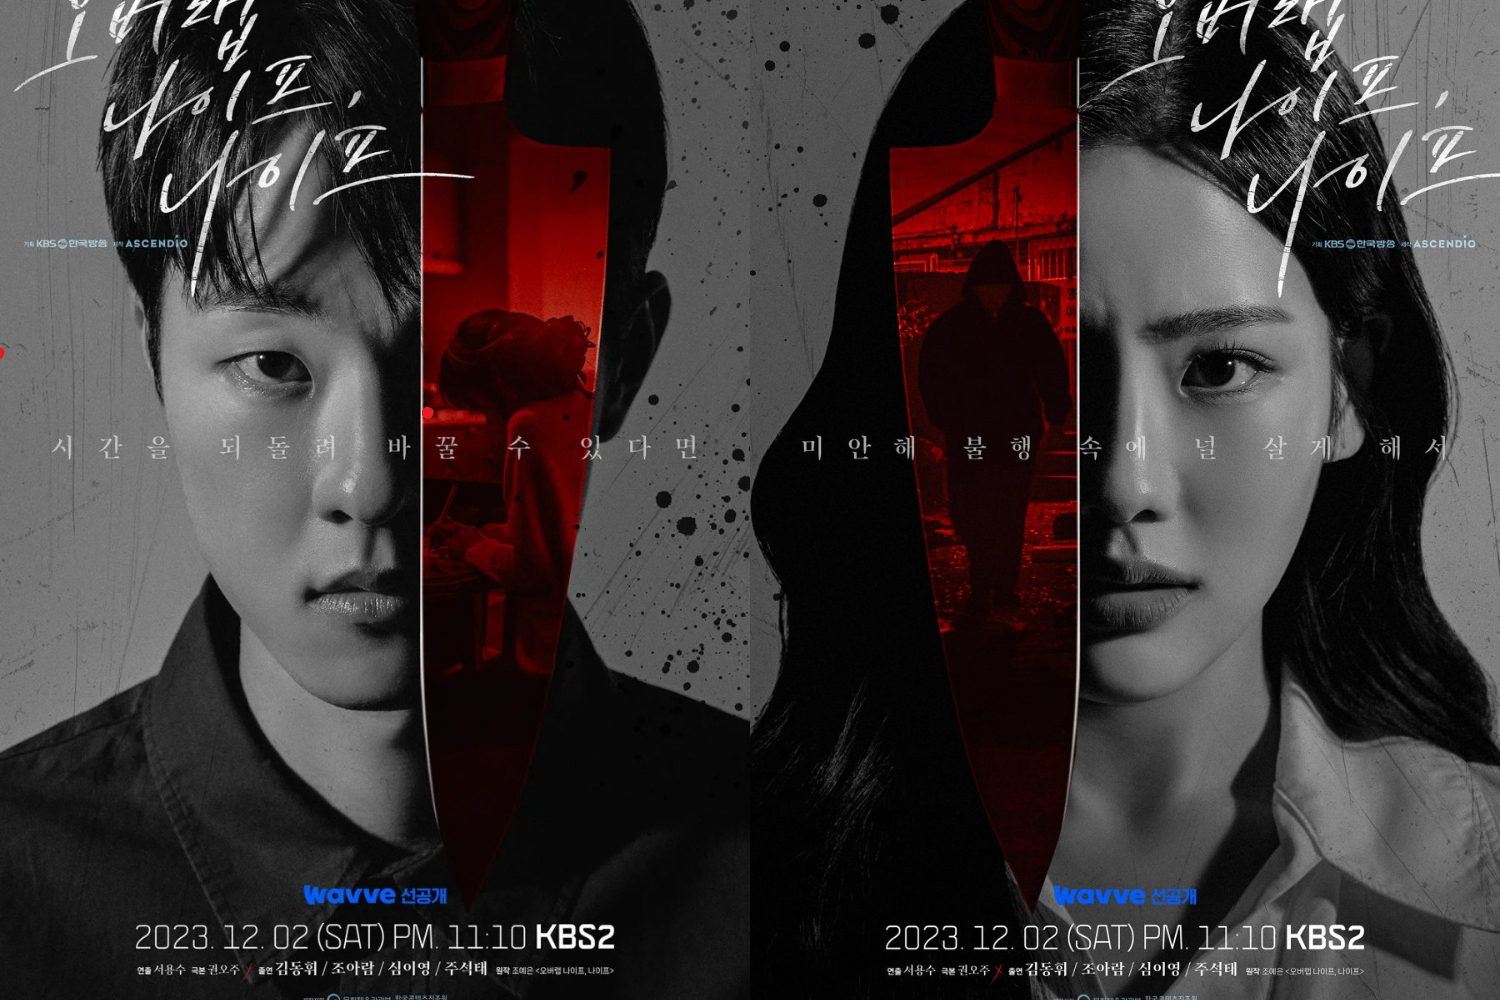 Overlap Knife, Knife (2023 KBS Drama Special Ep 8) / Overlap Knife, Knife (2023 KBS Drama Special Ep 8) (2023)